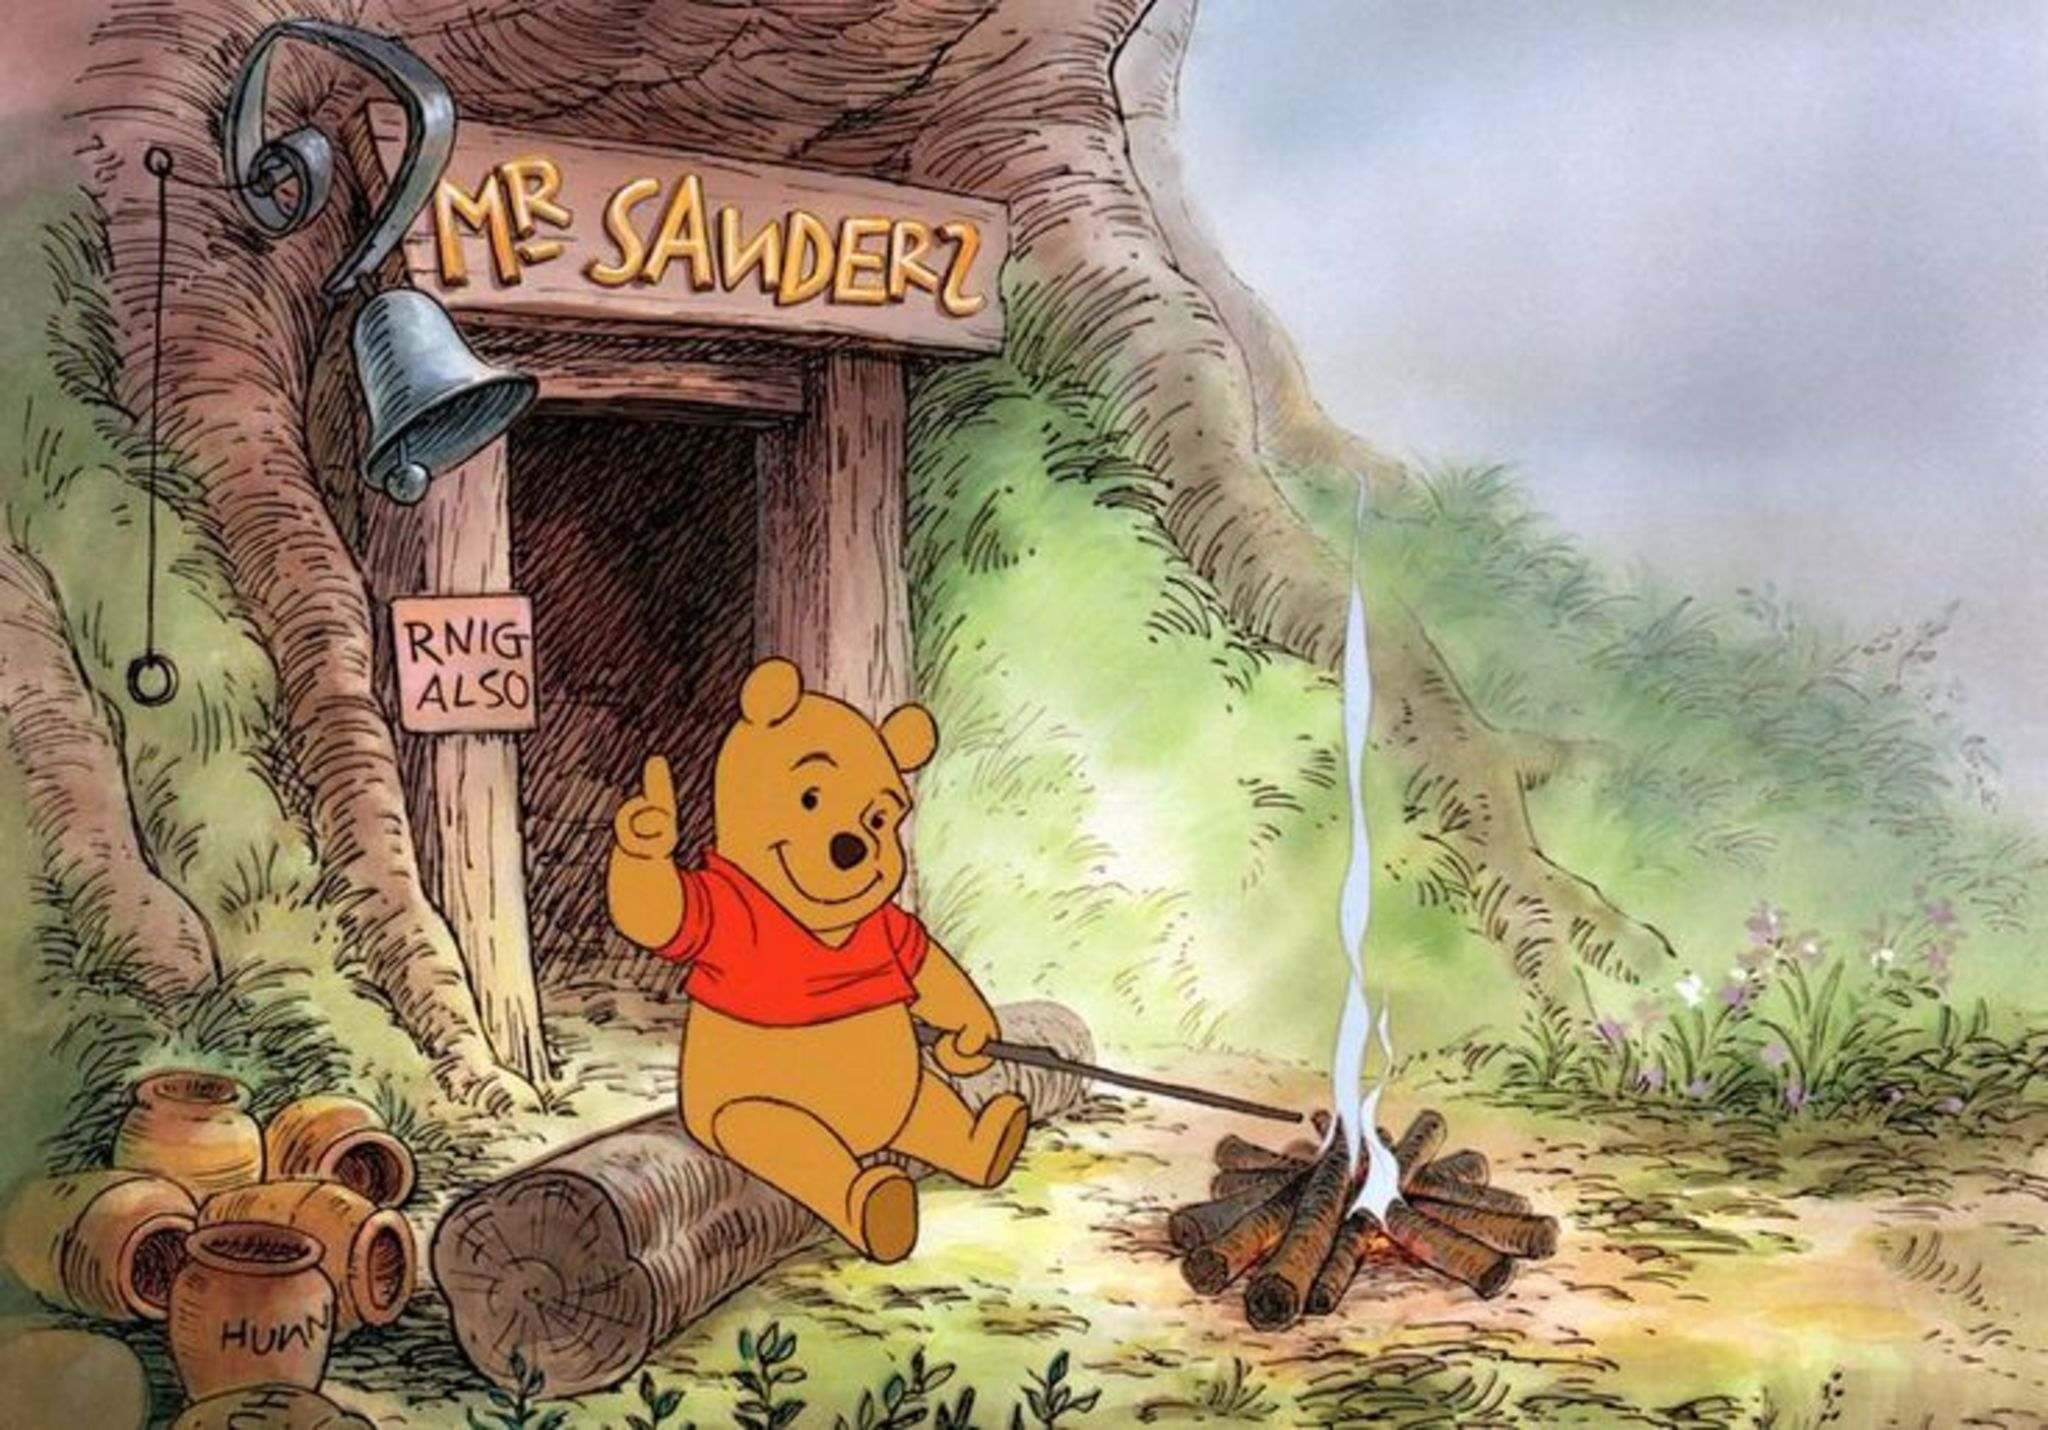 Winnie the pooh adventures. Винни пух Дисней 1966. Дом Винни пуха Дисней. Мистер Сандерс Винни пух.